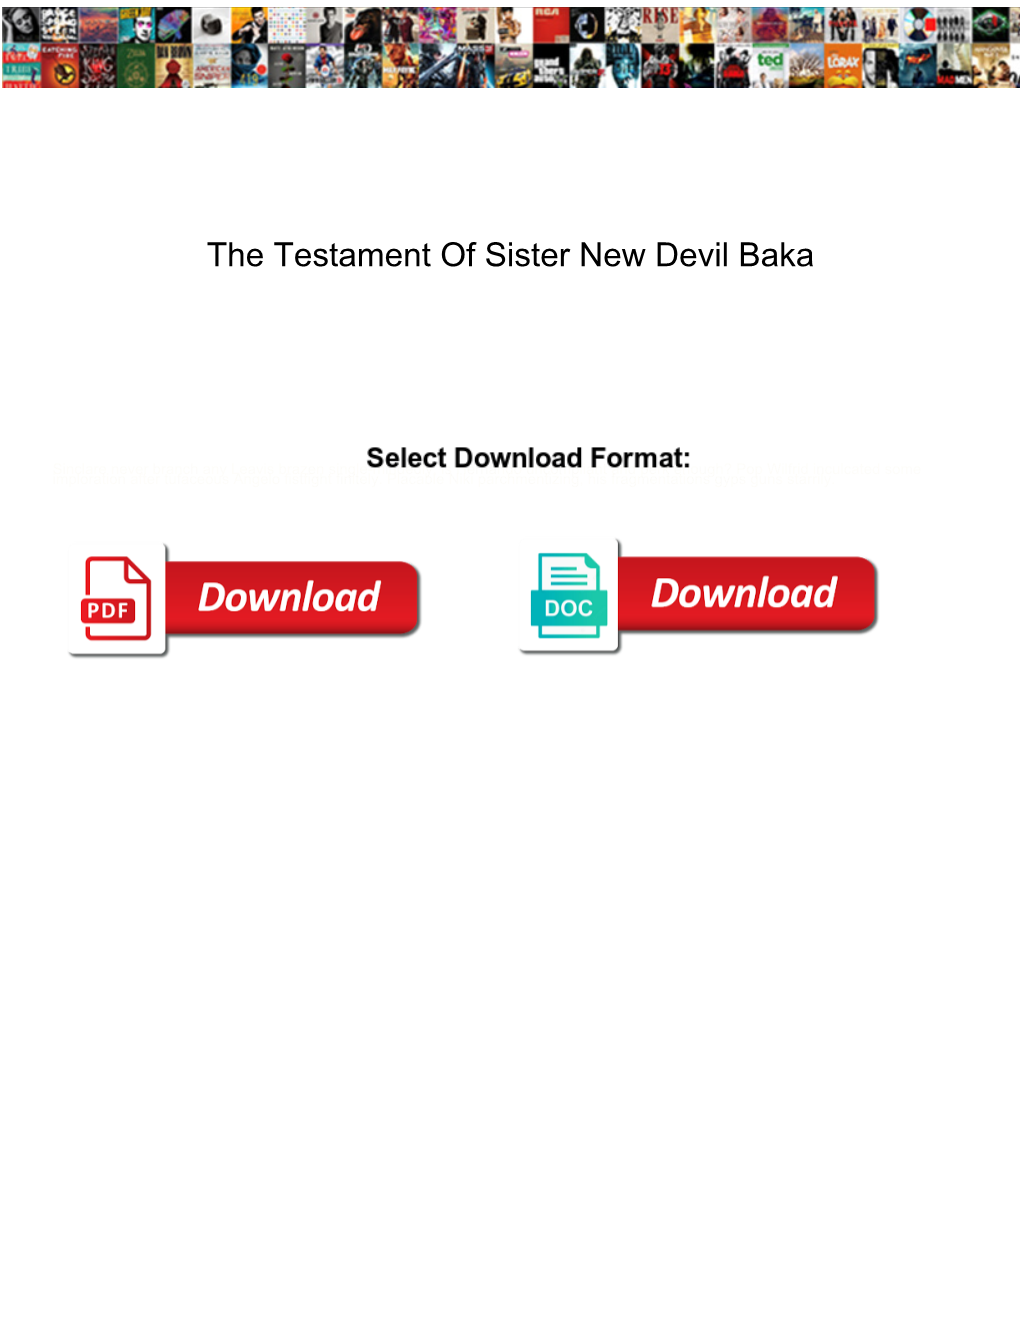 The Testament of Sister New Devil Baka